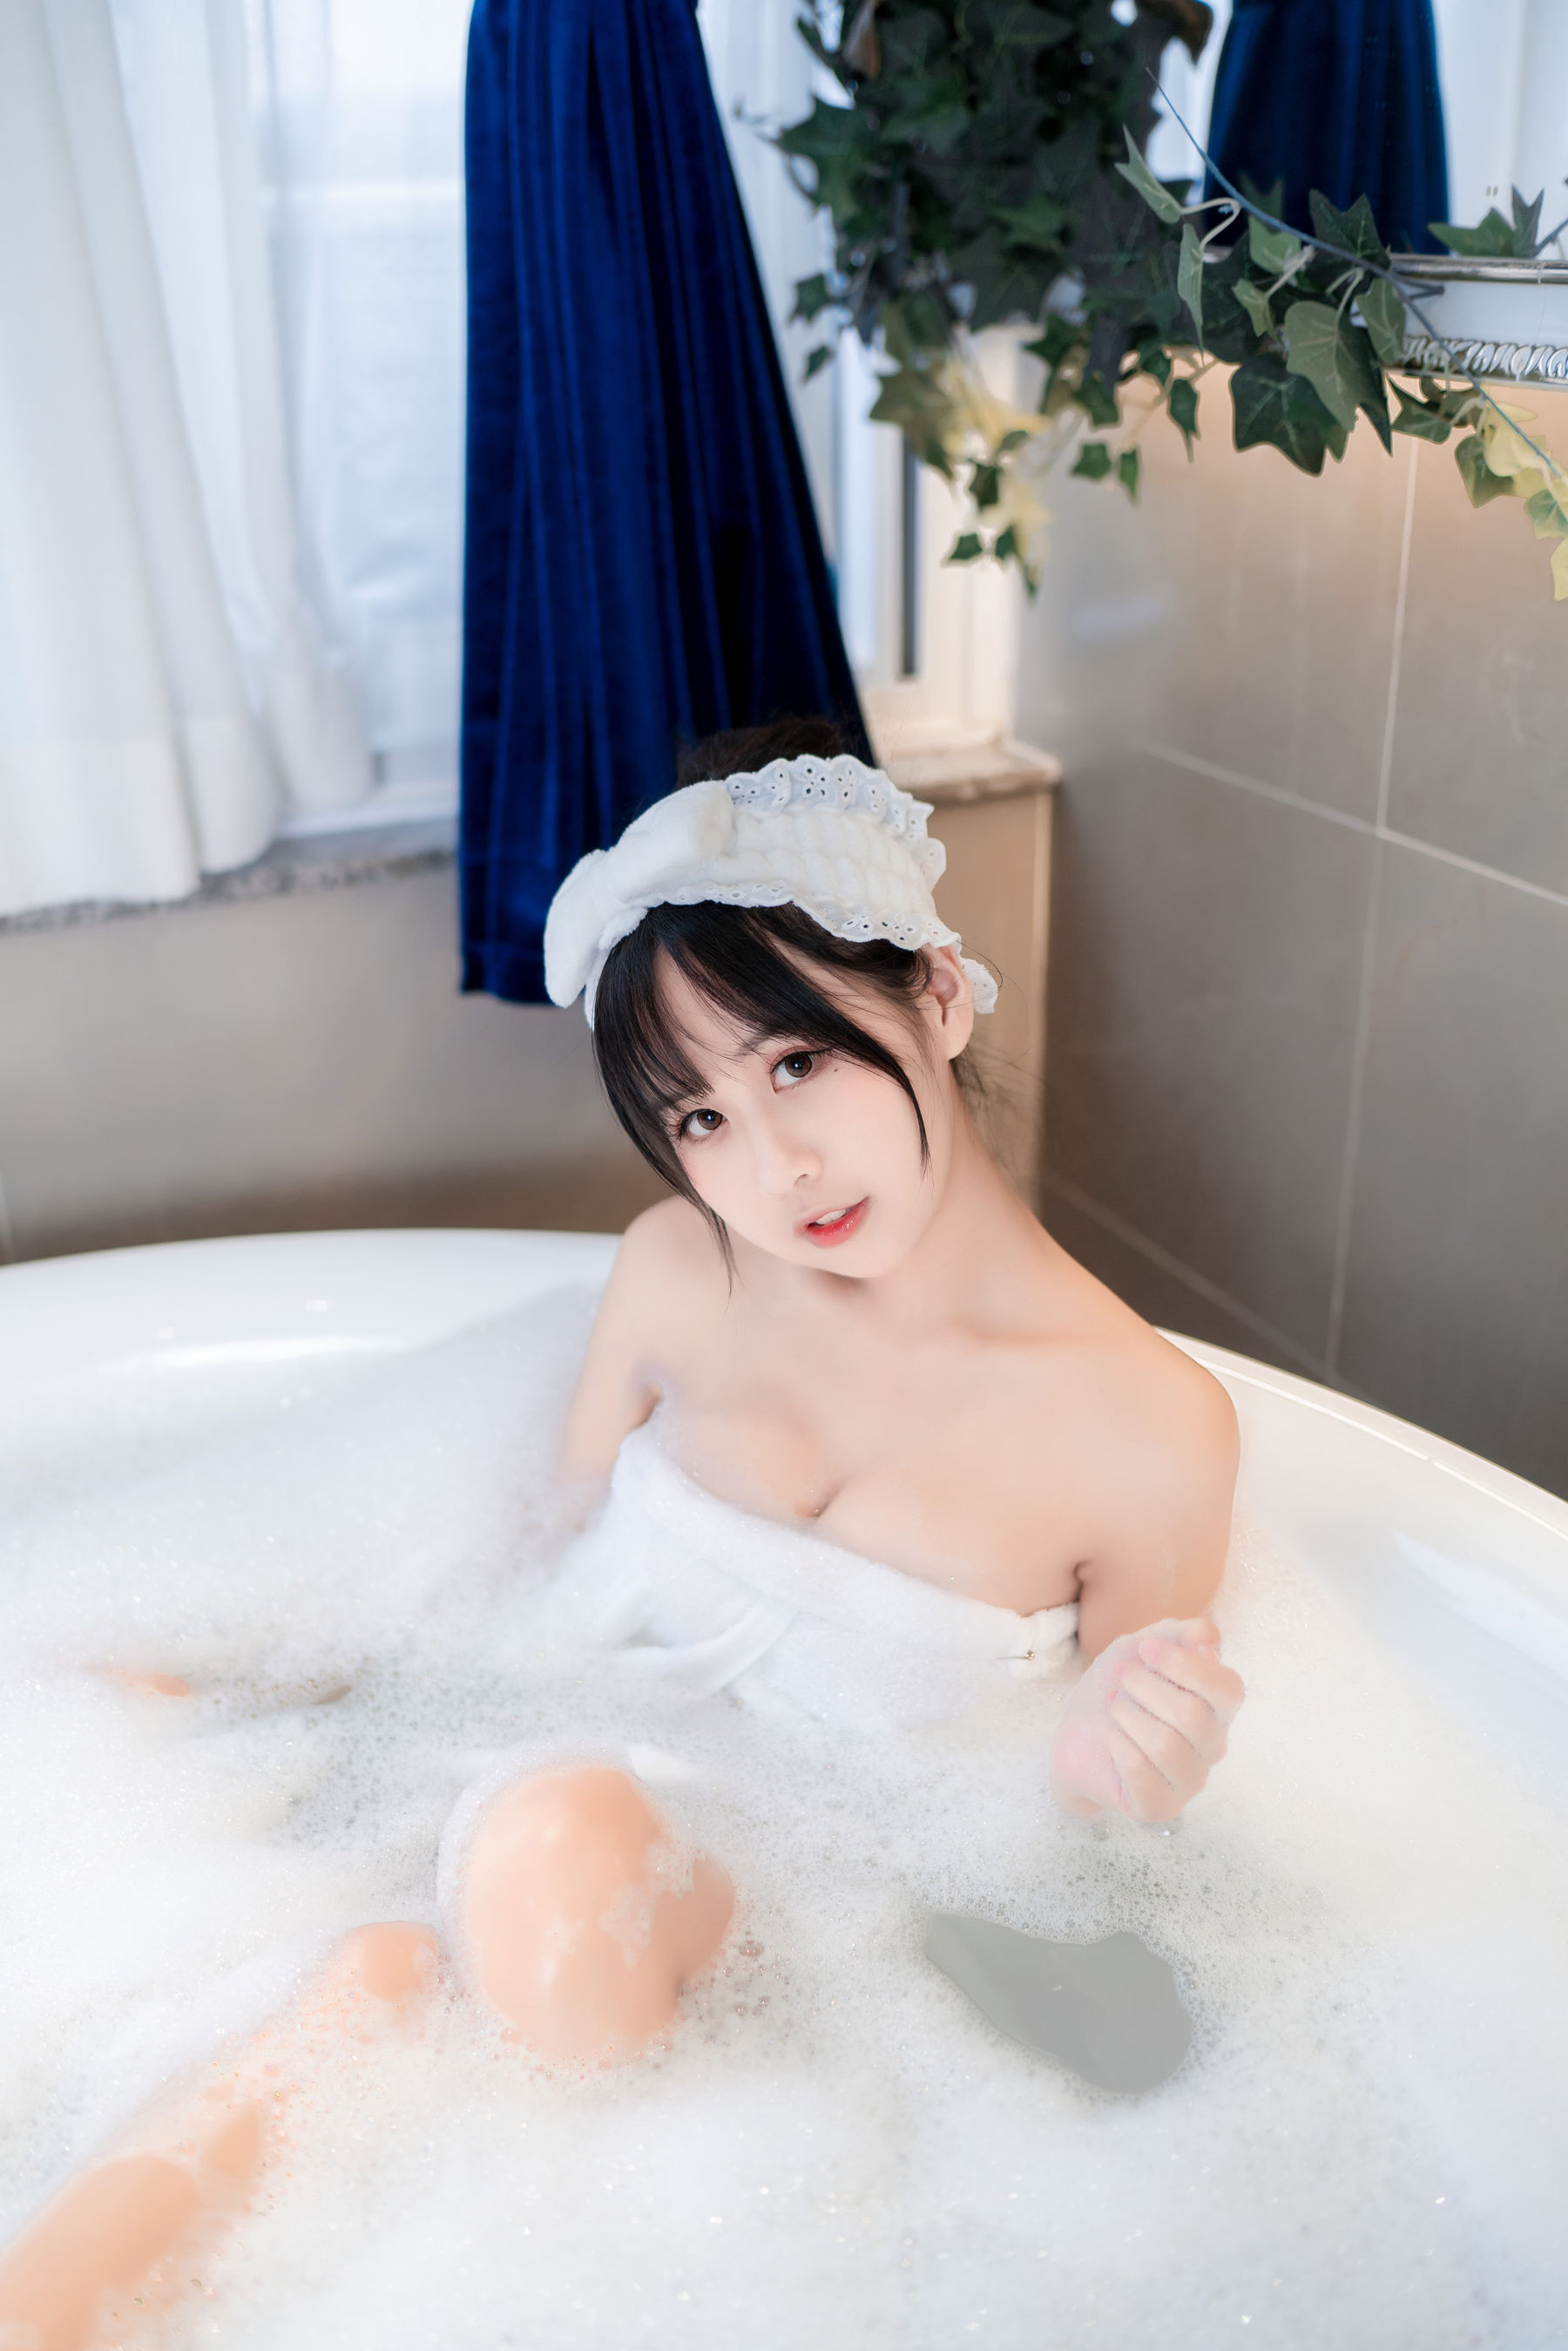 [COS welfare] Sunshine beautiful girl sprouts O0 – bath towel